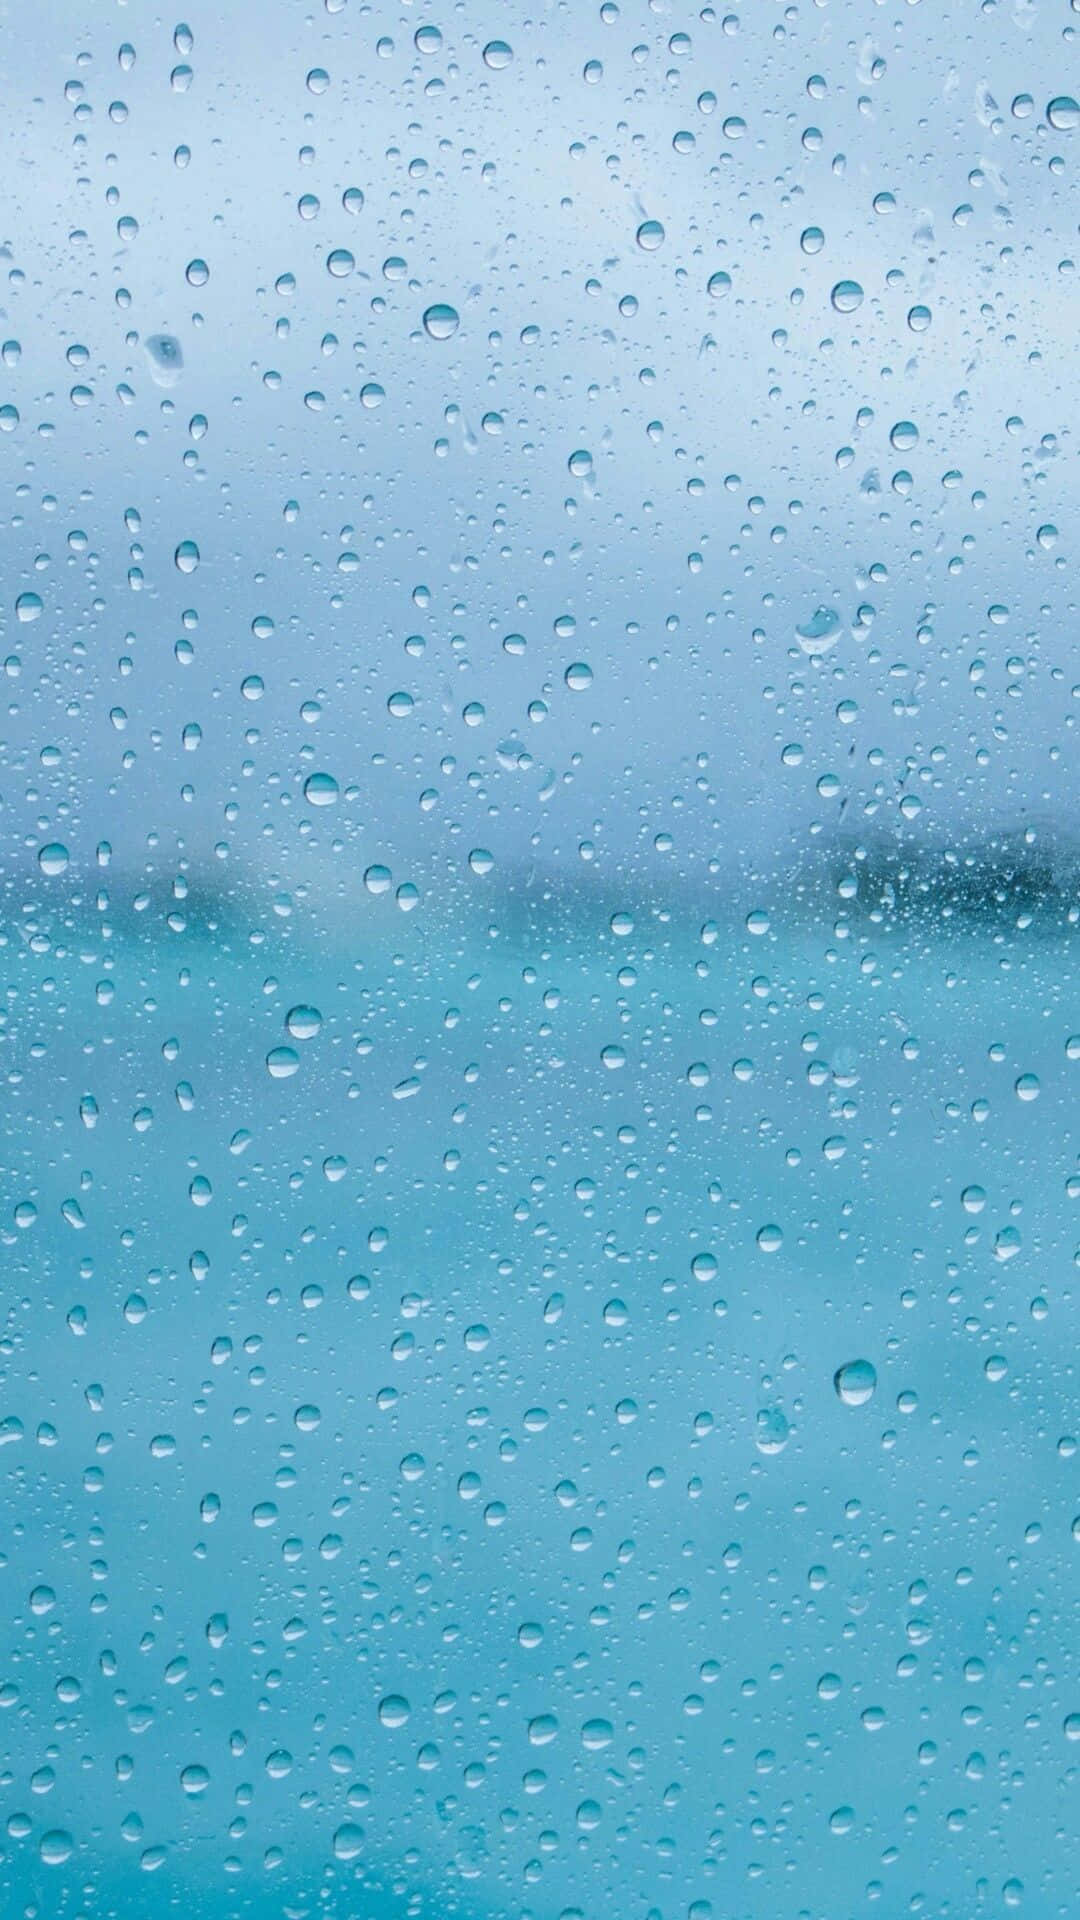 Google Pixel Water Droplets Blur Wallpaper